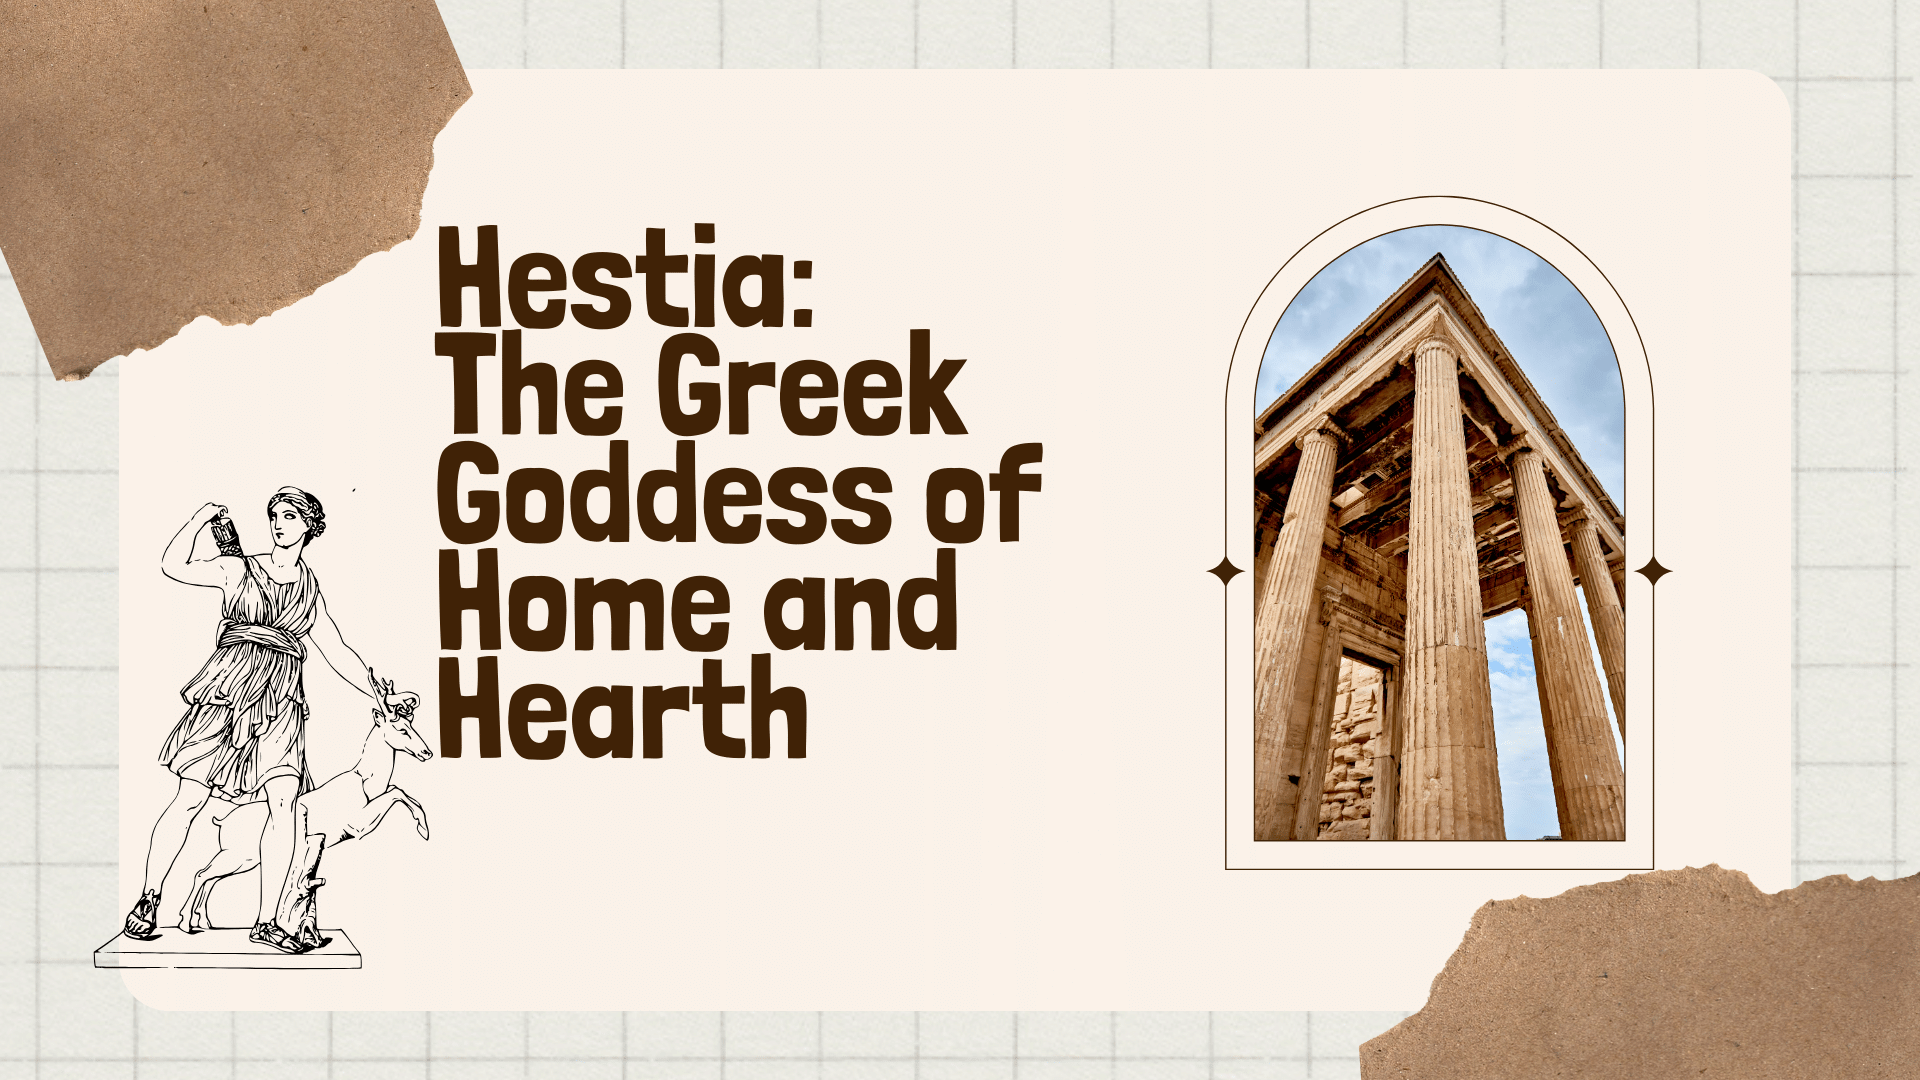 Hestia: The Greek Goddess of Home and Hearth